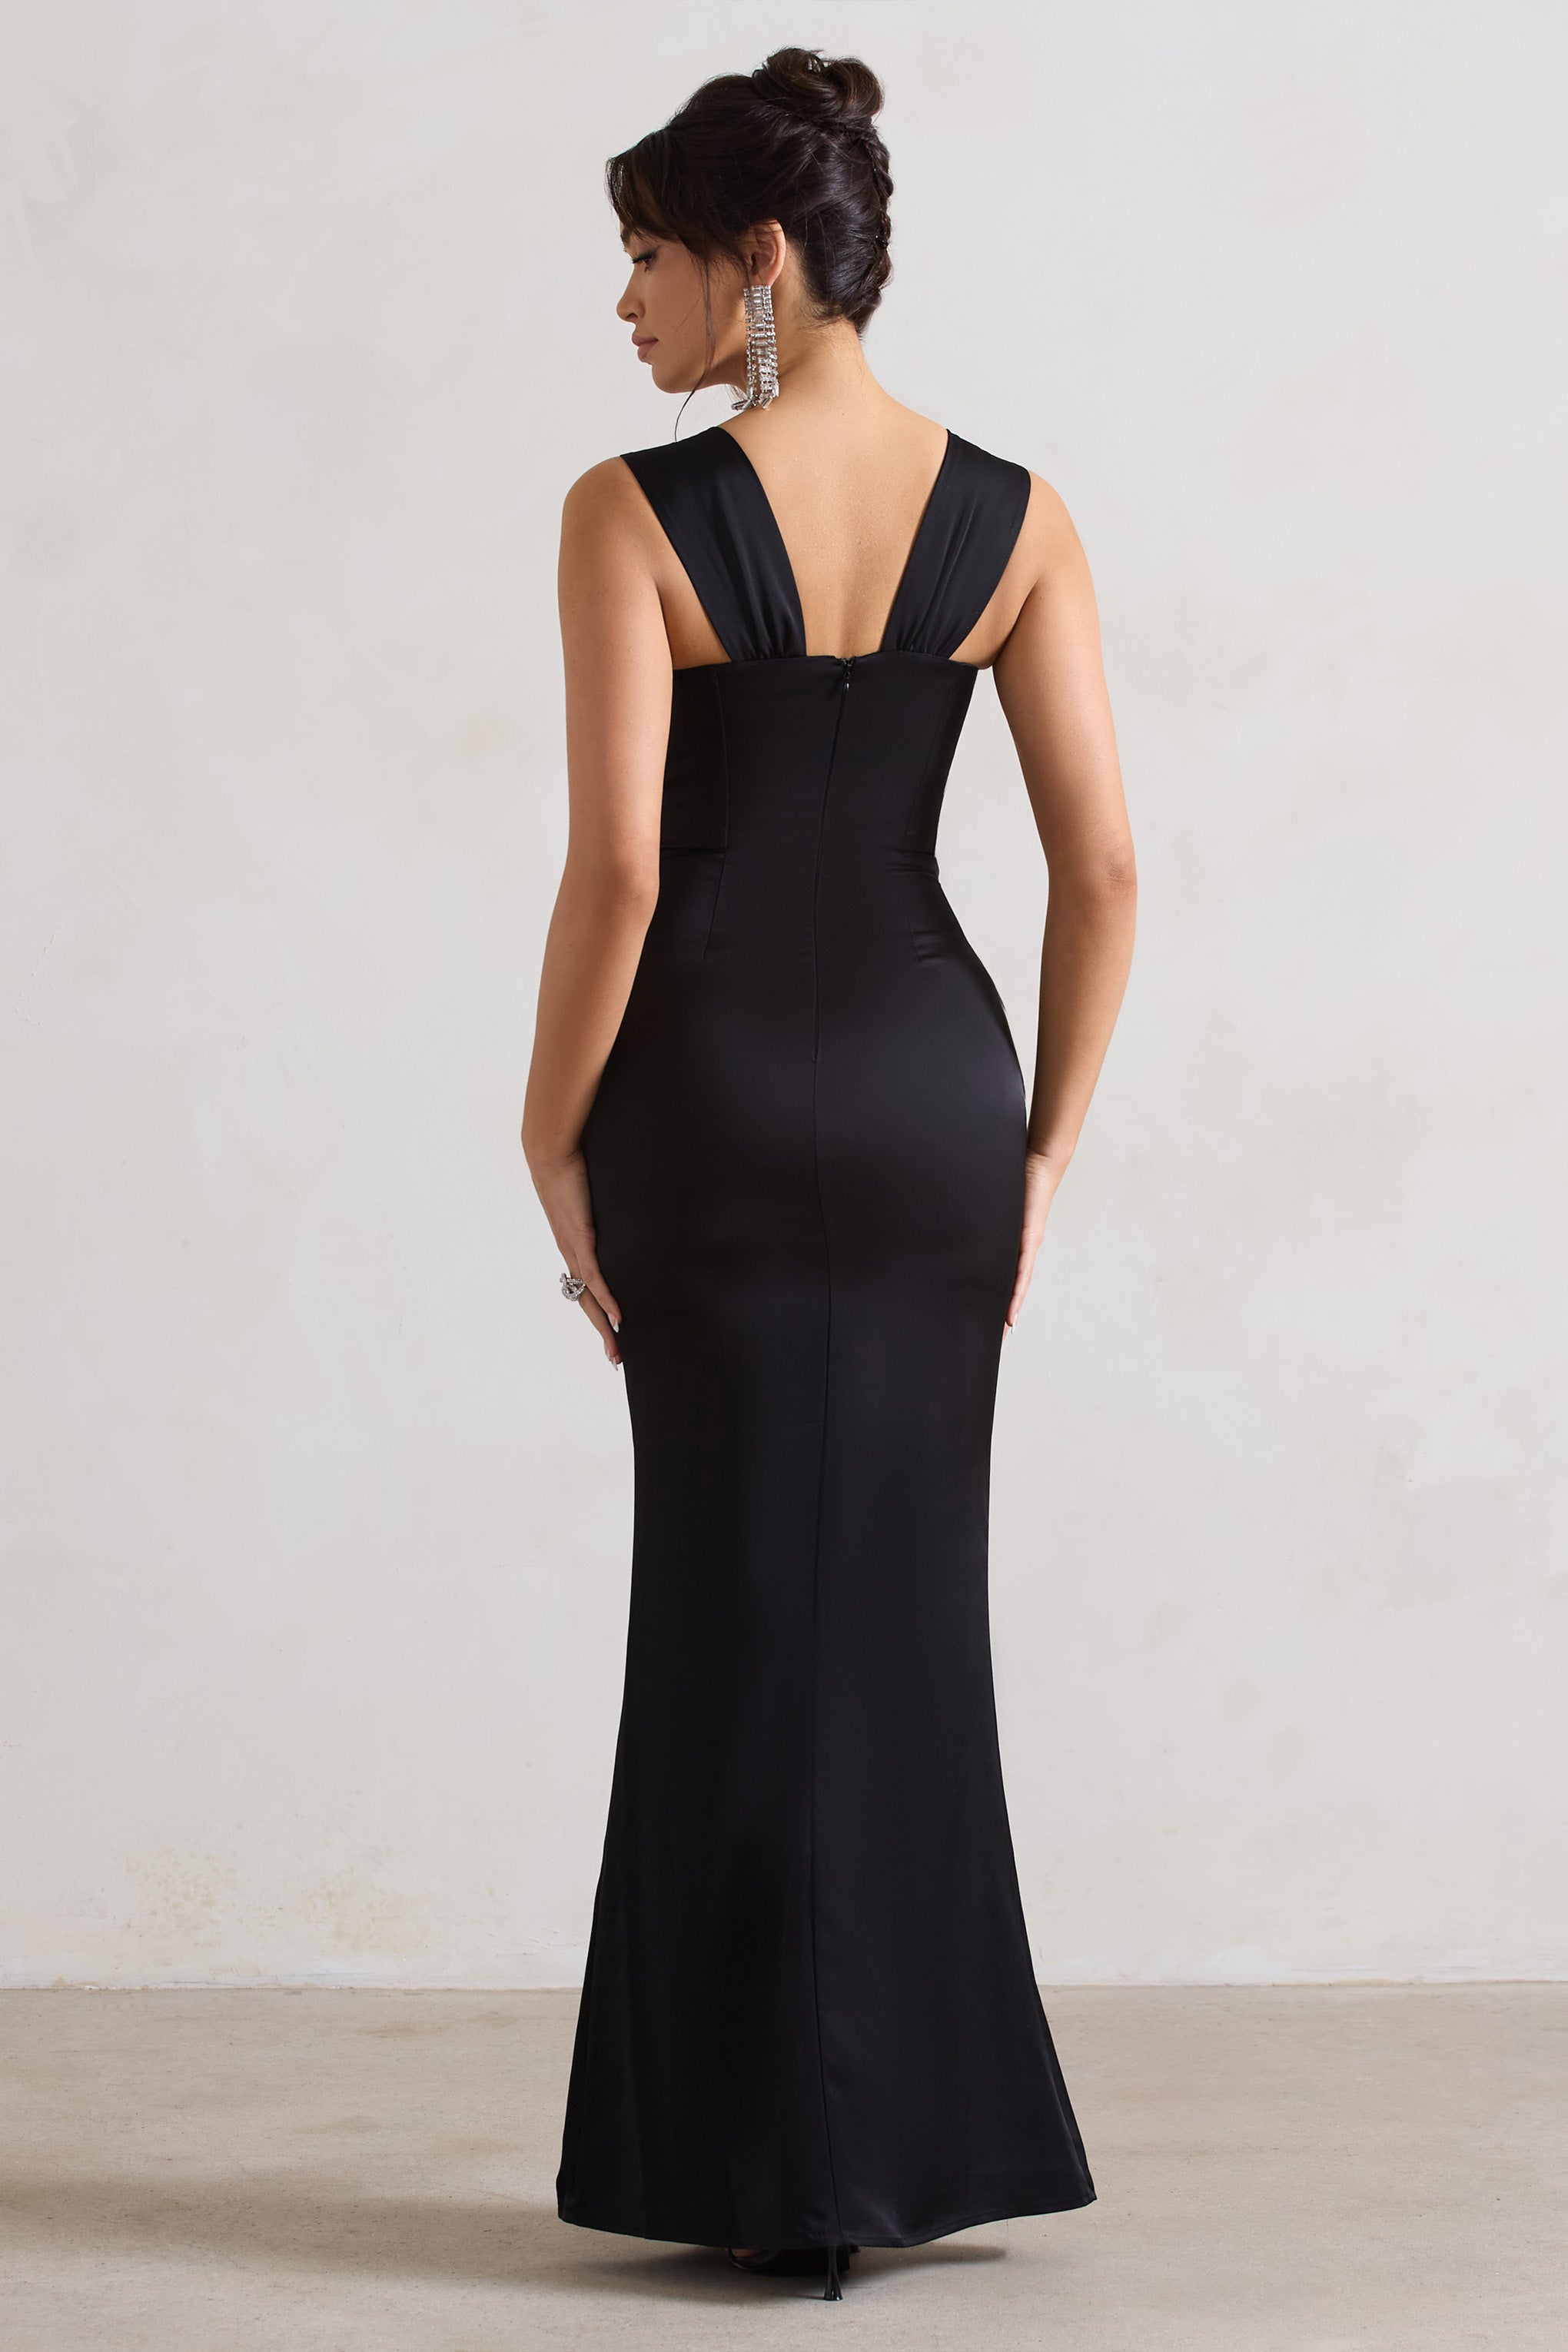 A Romantic Black Satin Corset Wrap Maxi Dress